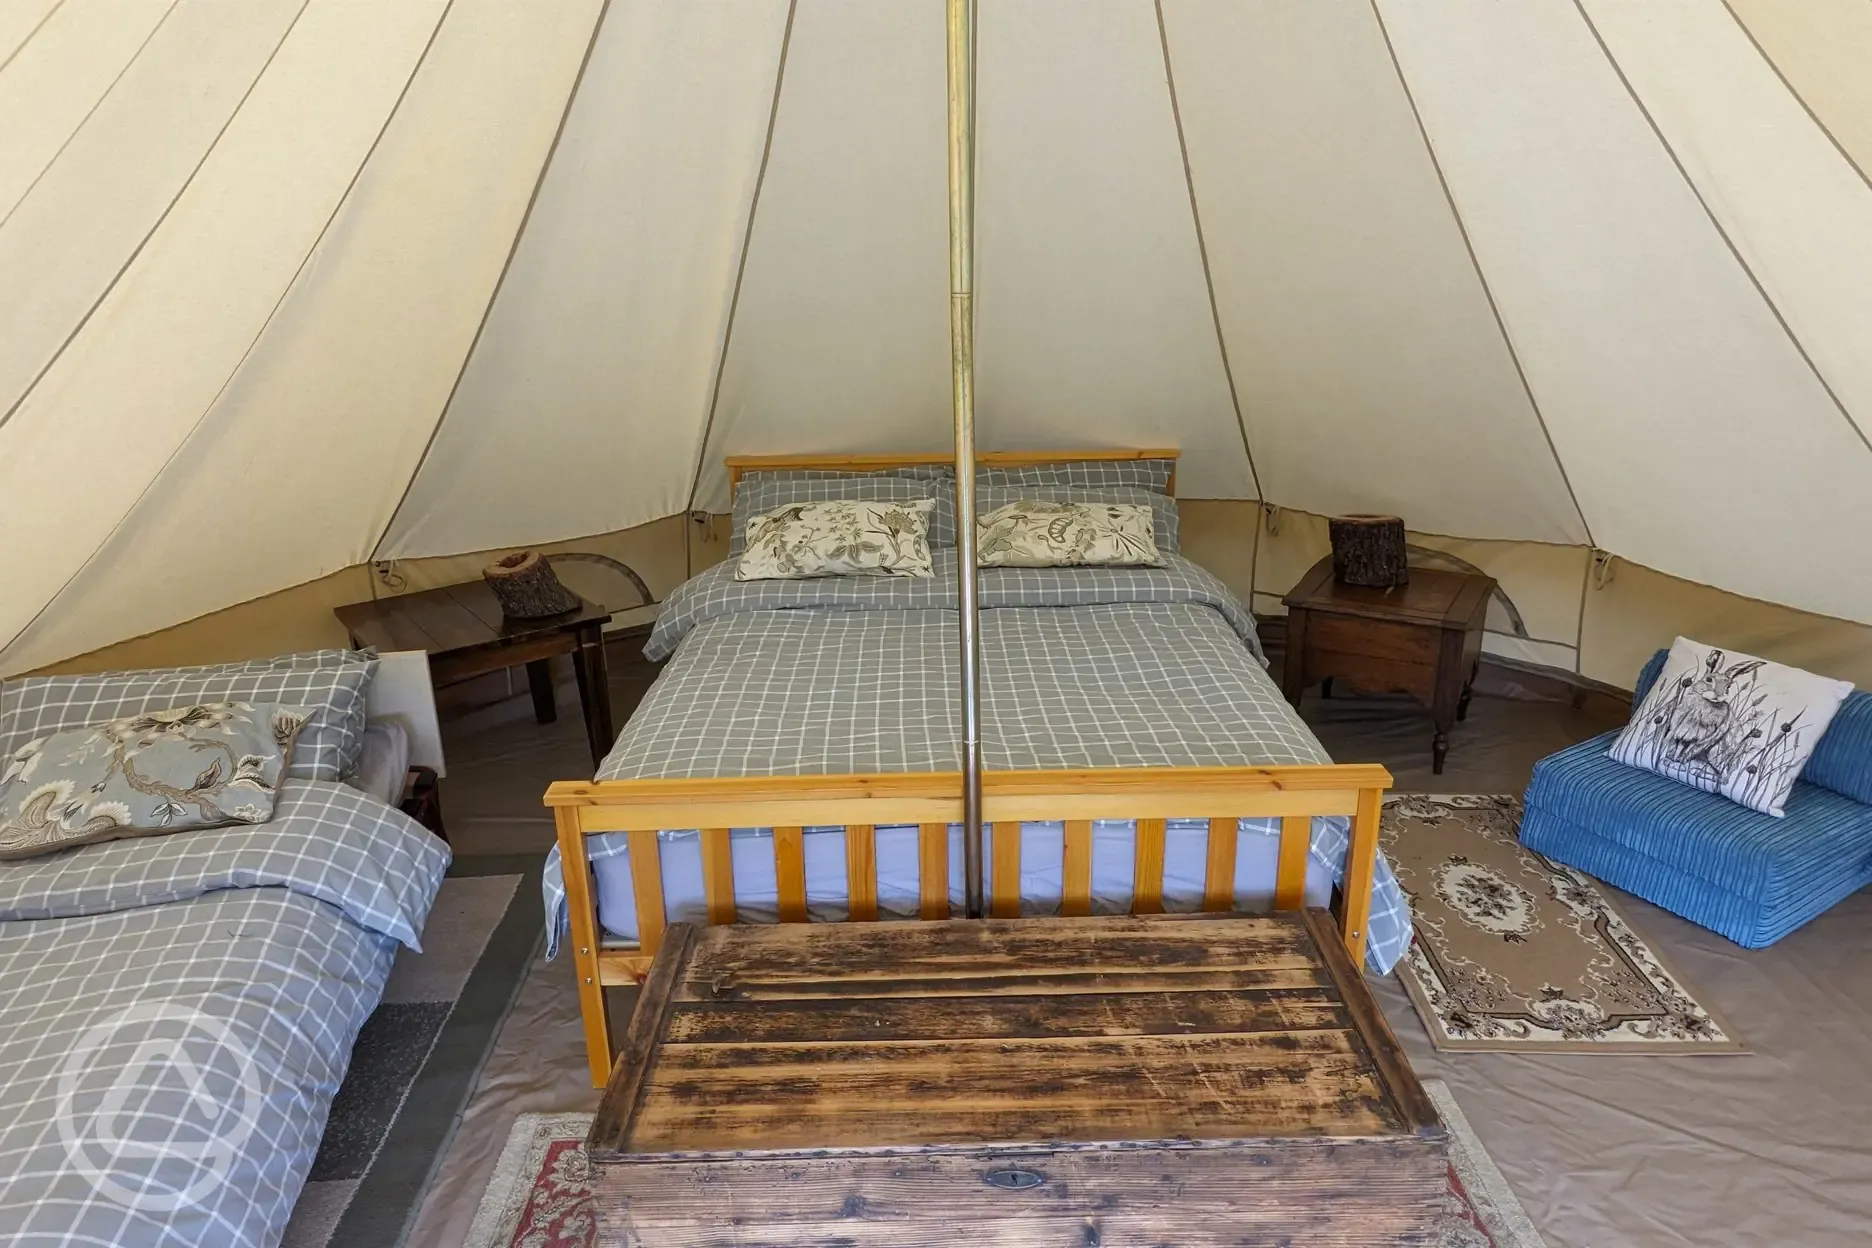 Inside bell tent